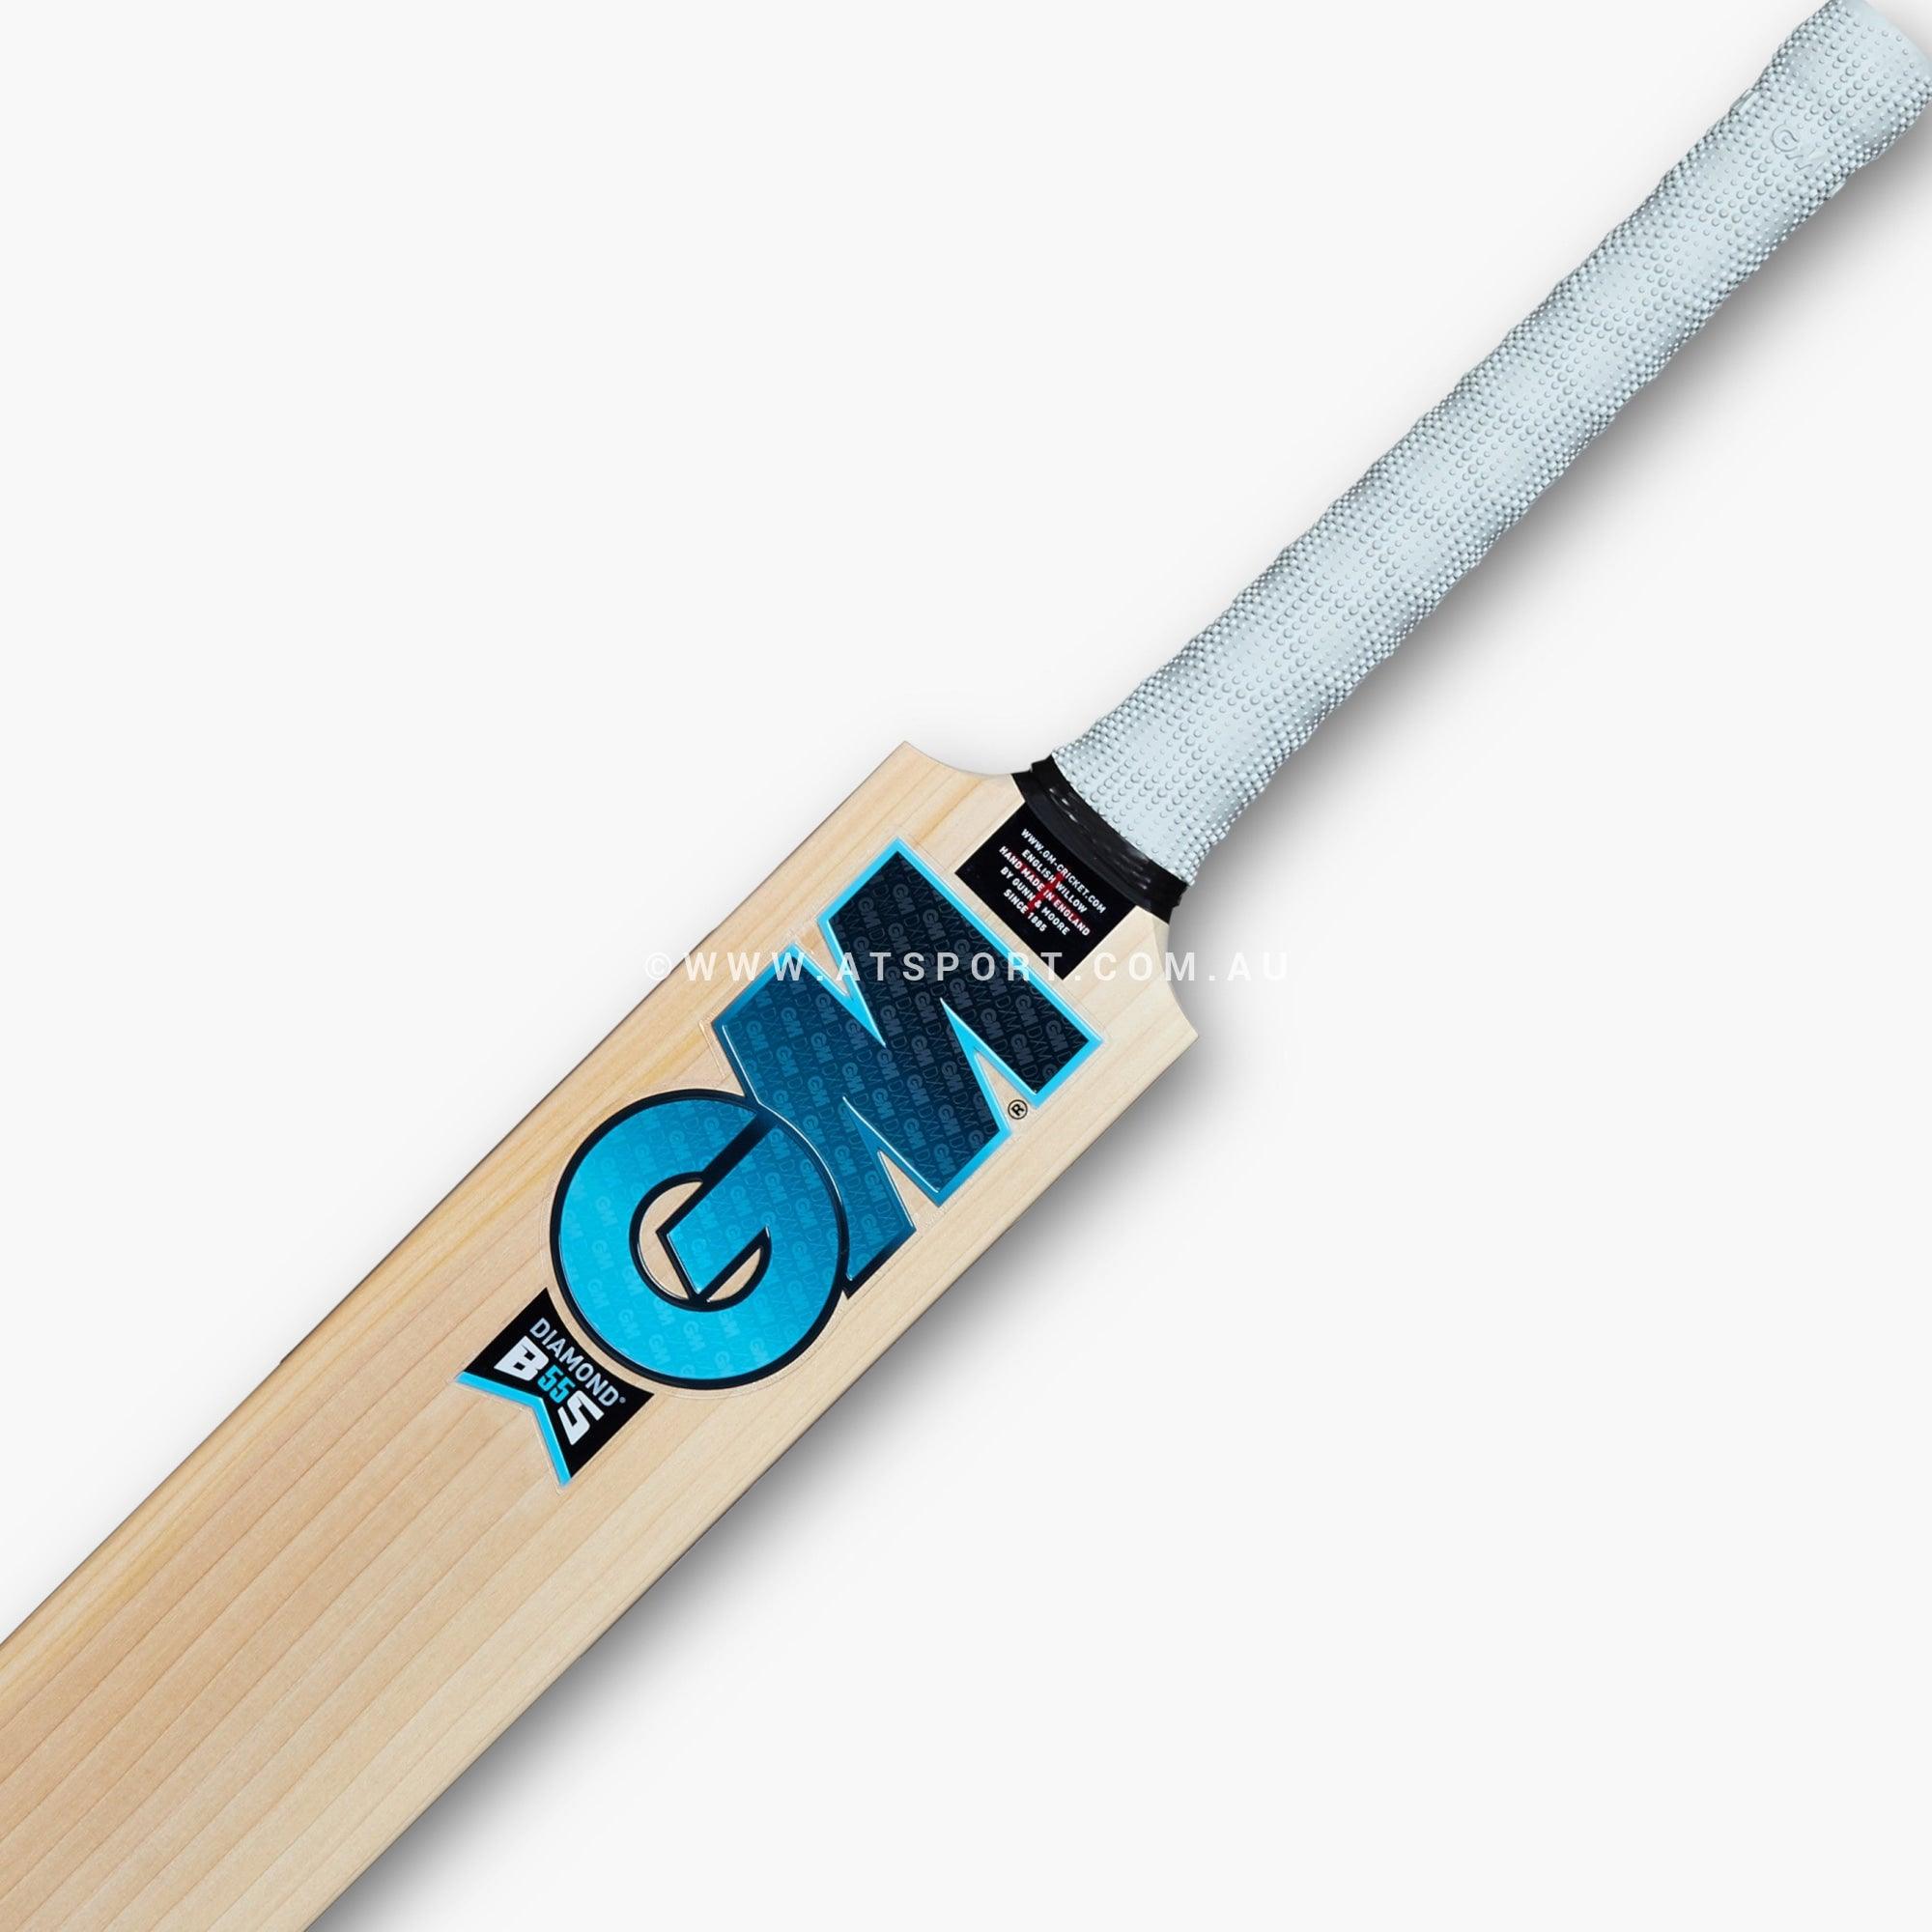 GM Diamond 404 DXM TTNOW L540 English Willow Cricket Bat - SH - AT Sports